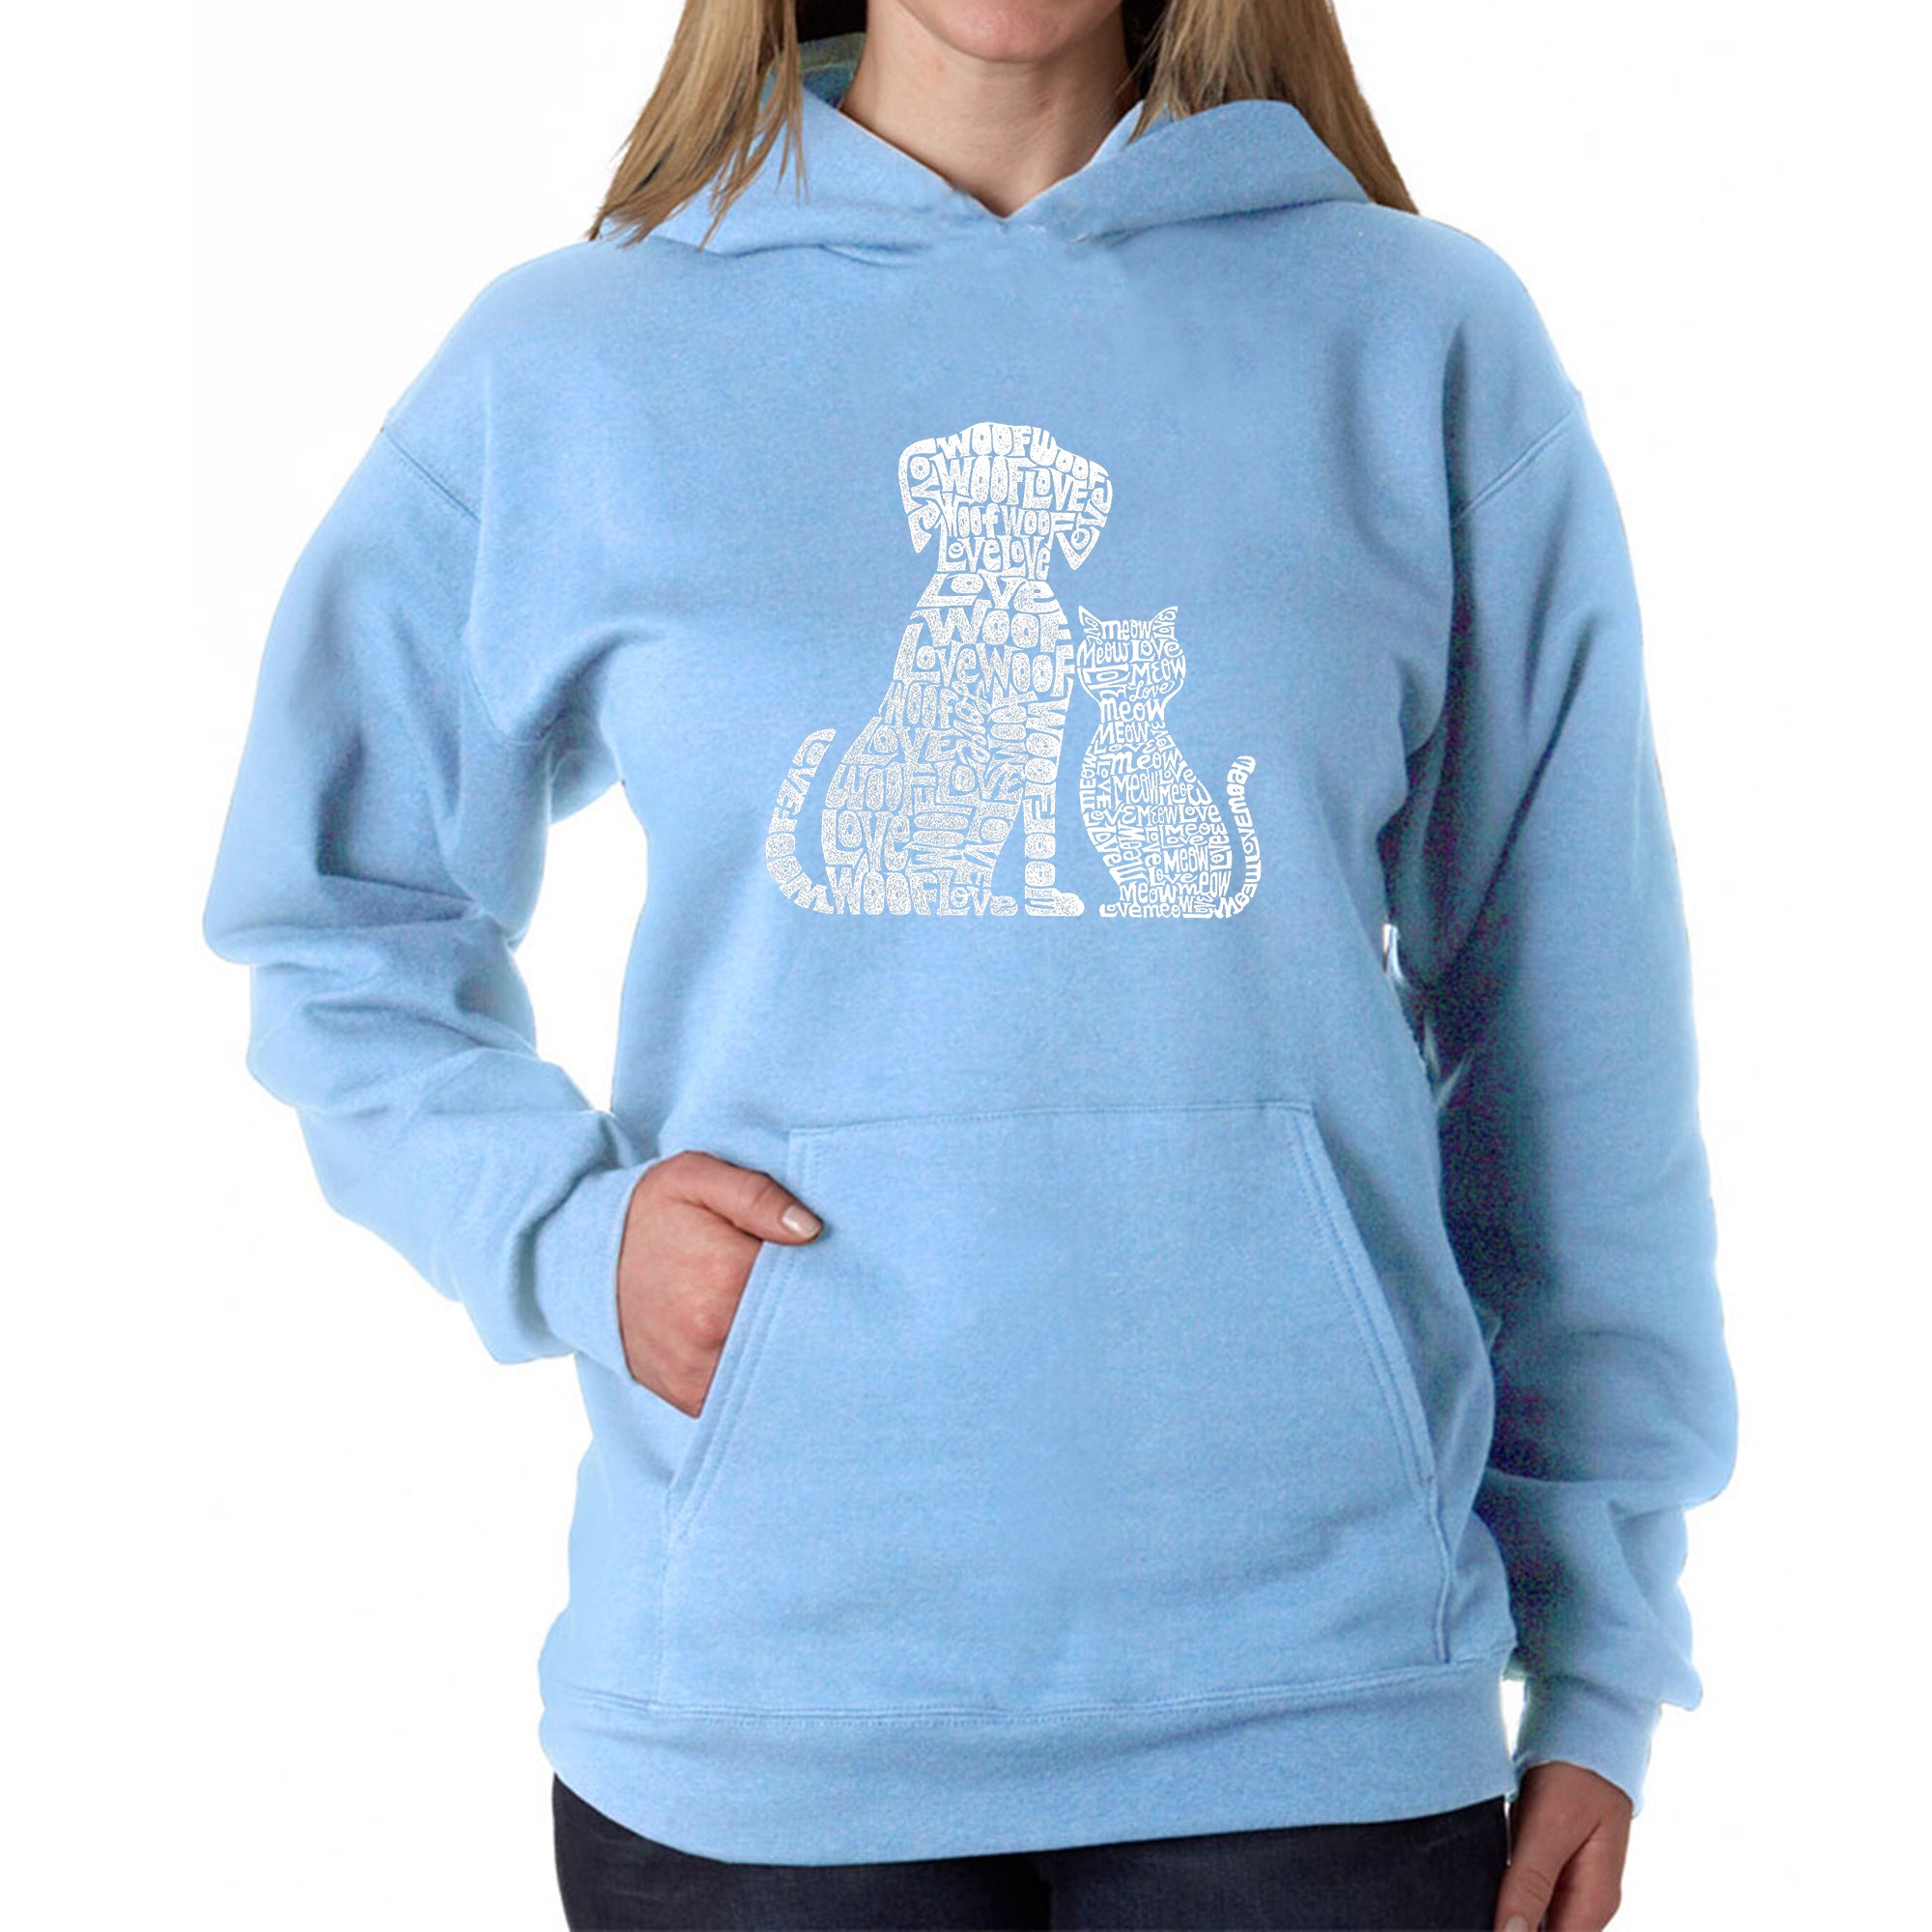 Dogs And Cats - Women's Word Art Hooded Sweatshirt - Blue - Medium